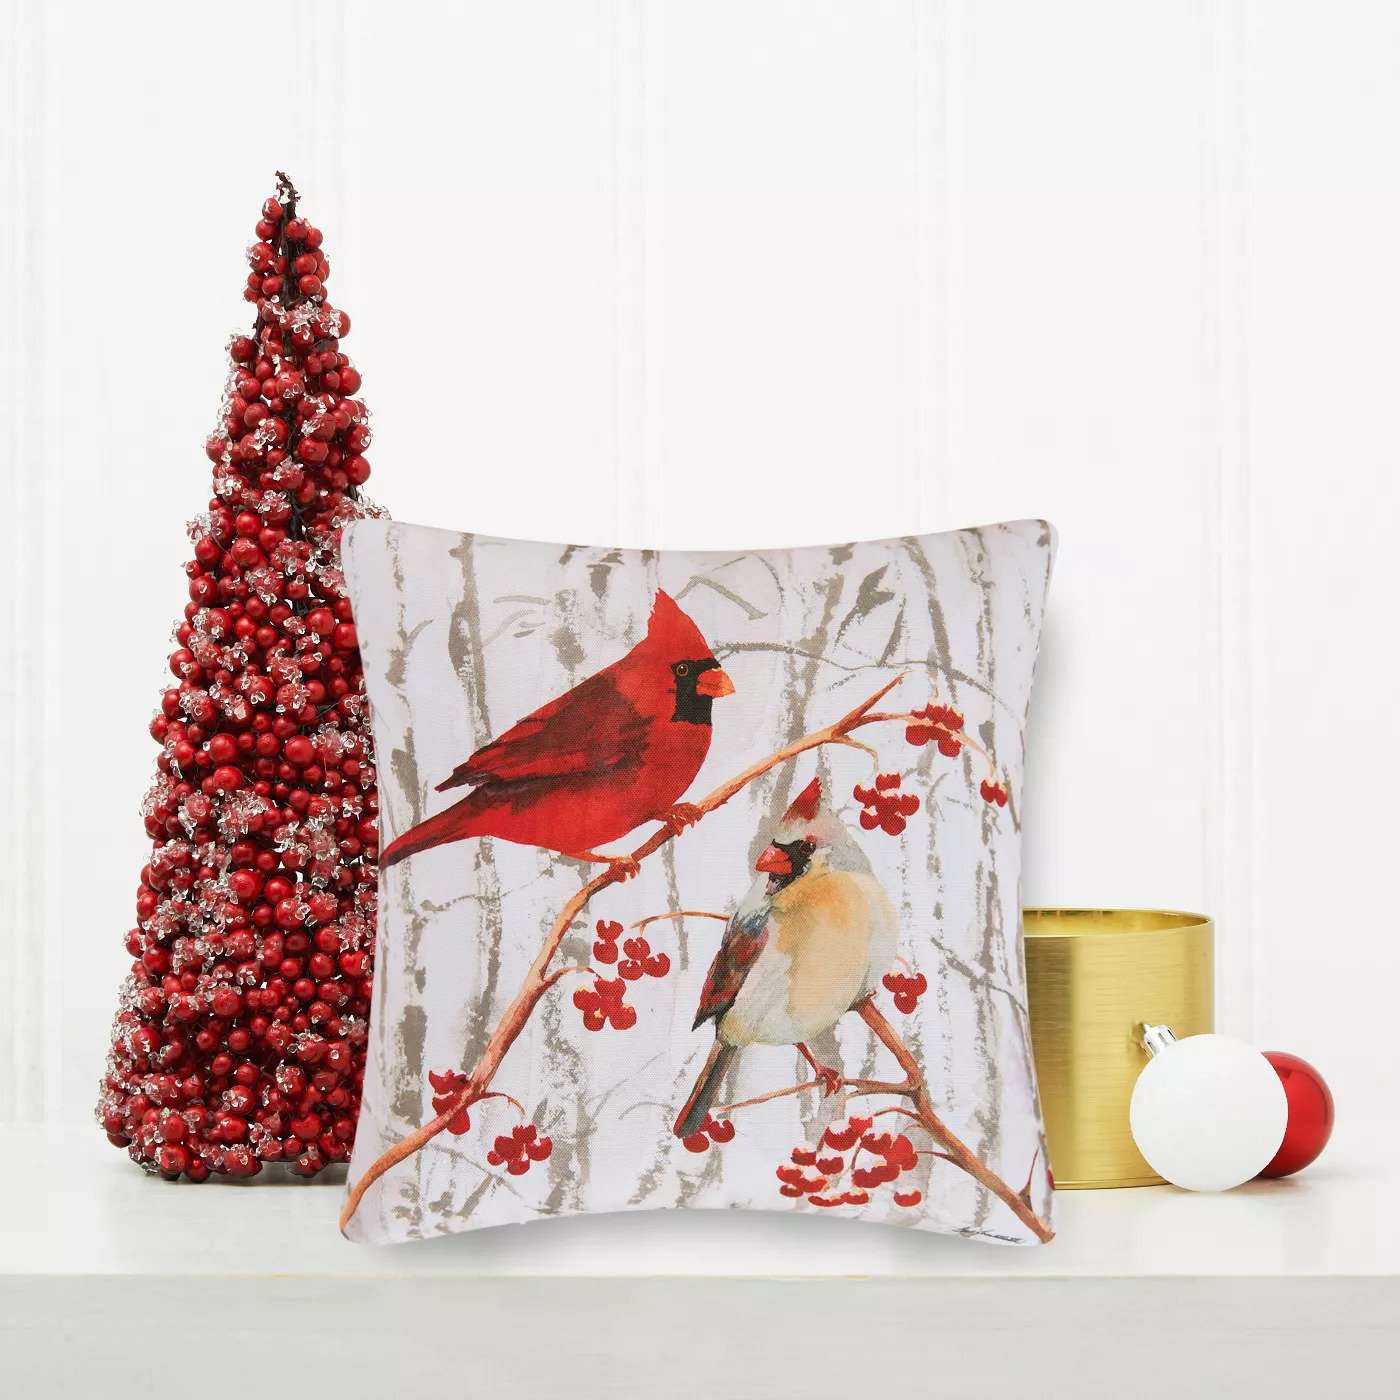 C&F Home 18" x 18" Cardinal Indoor / Outdoor Decorative Christmas Holiday Throw Pillow